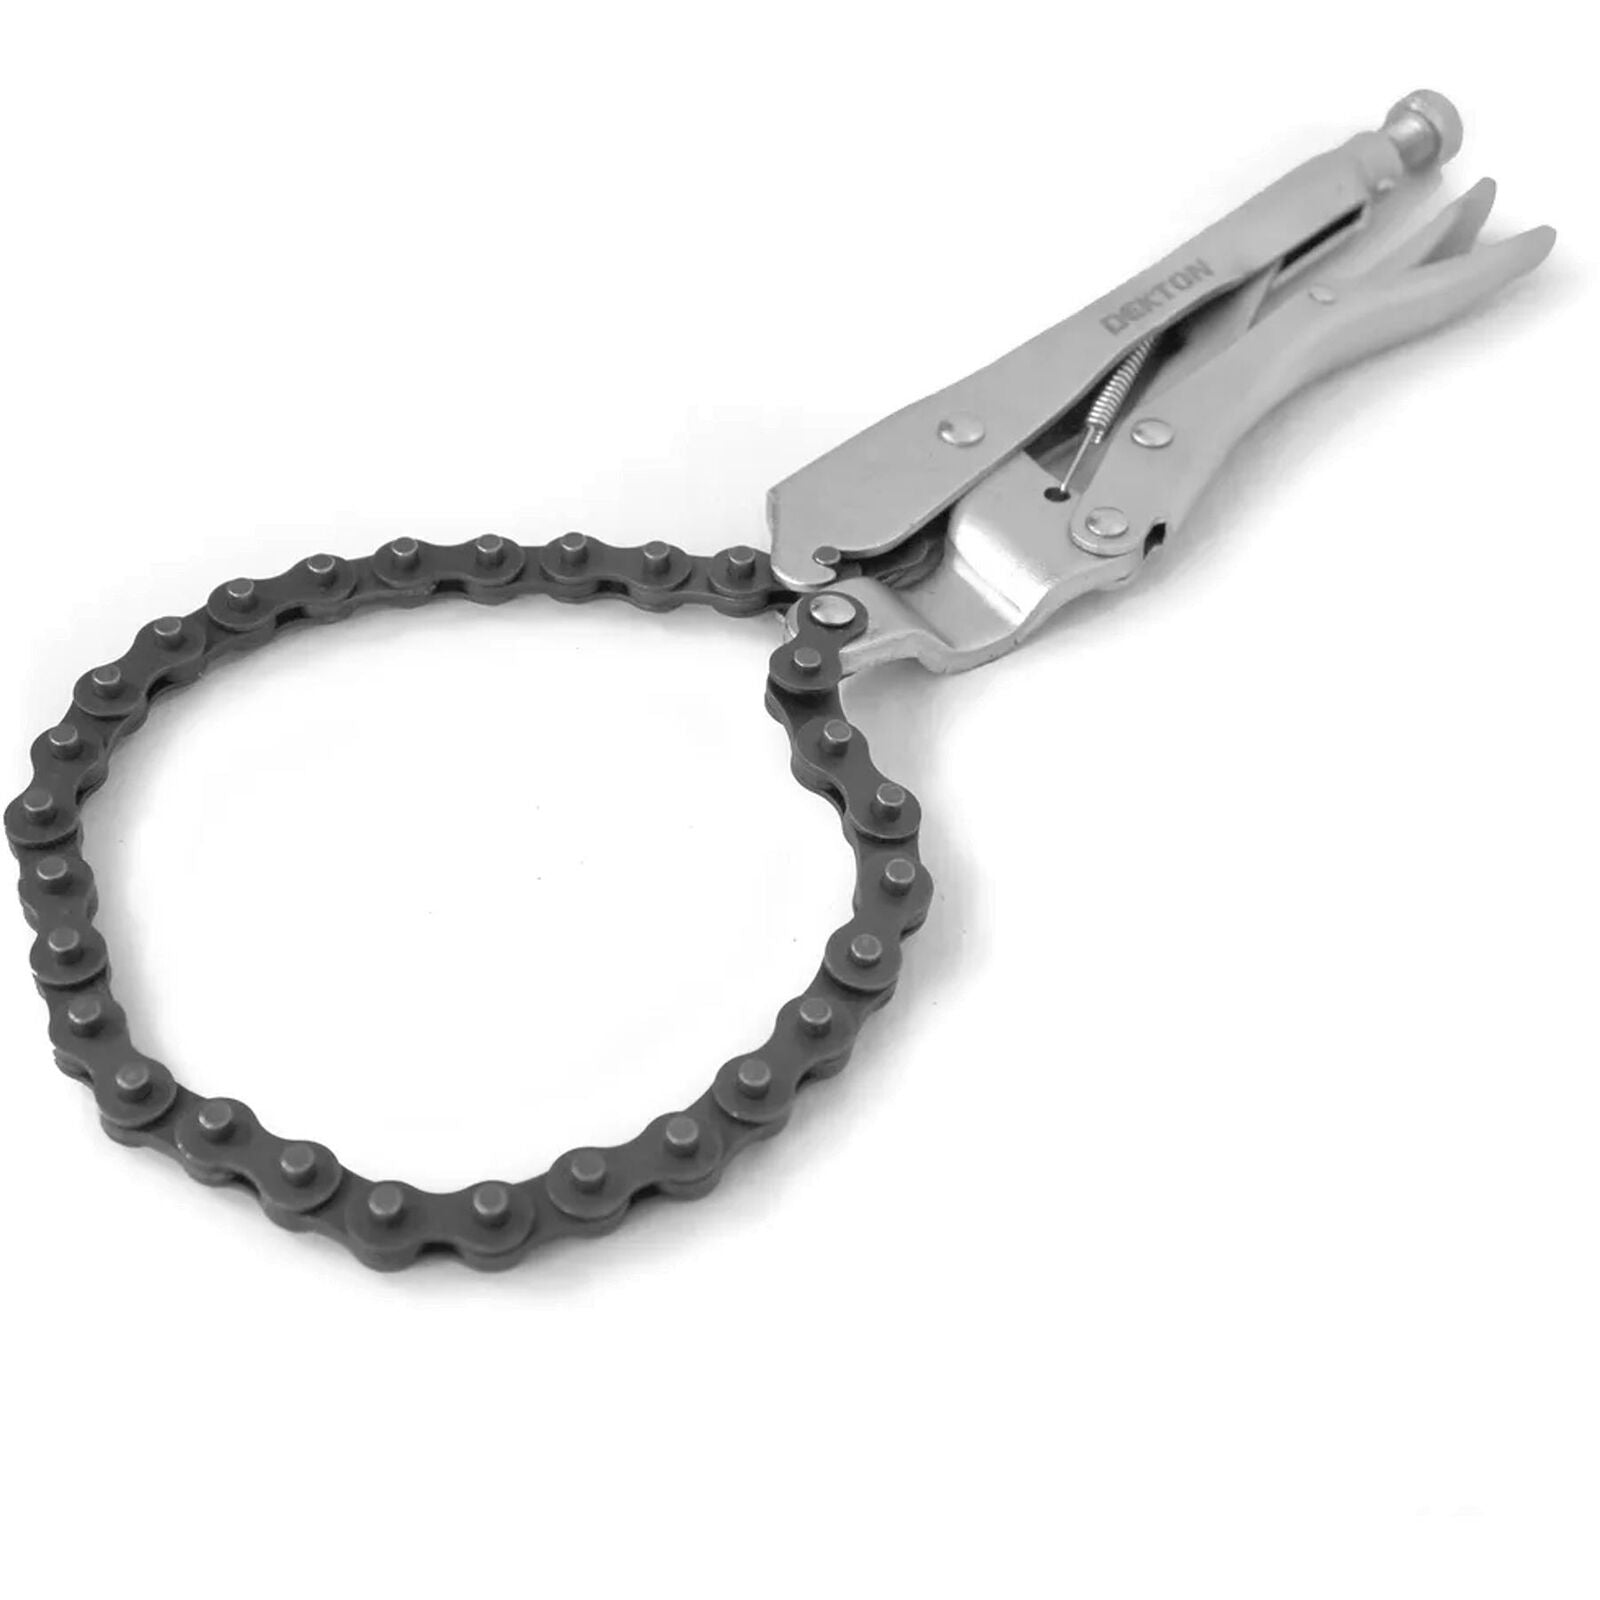 Dekton Adjustable Locking Mole Grip Chain Wrench Pliers Pipe Oil Filter Tool